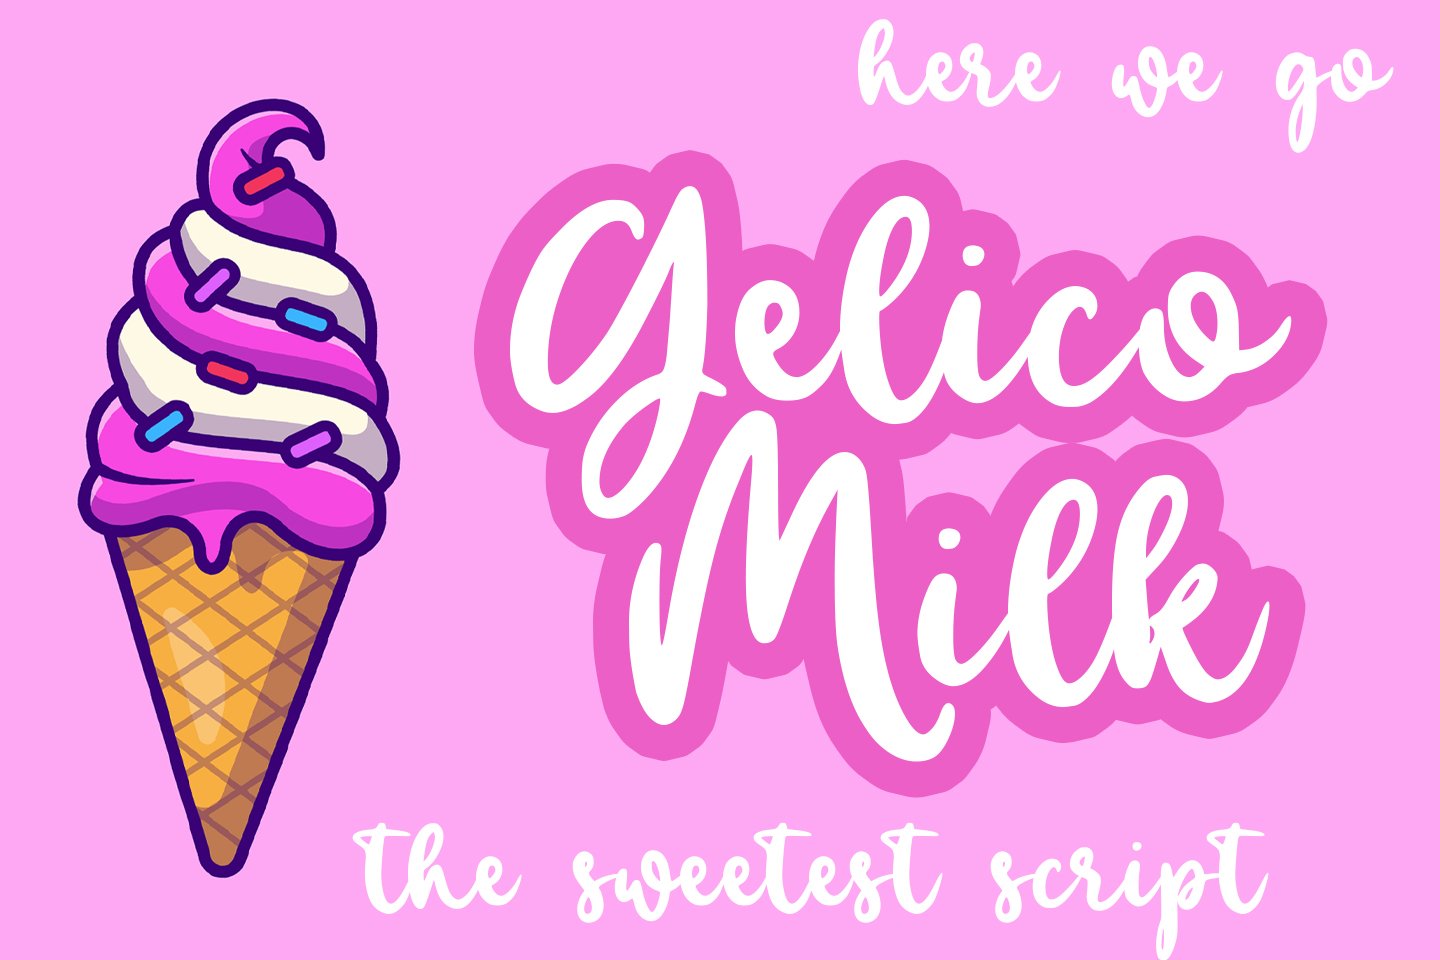 Gelico Milk cover image.